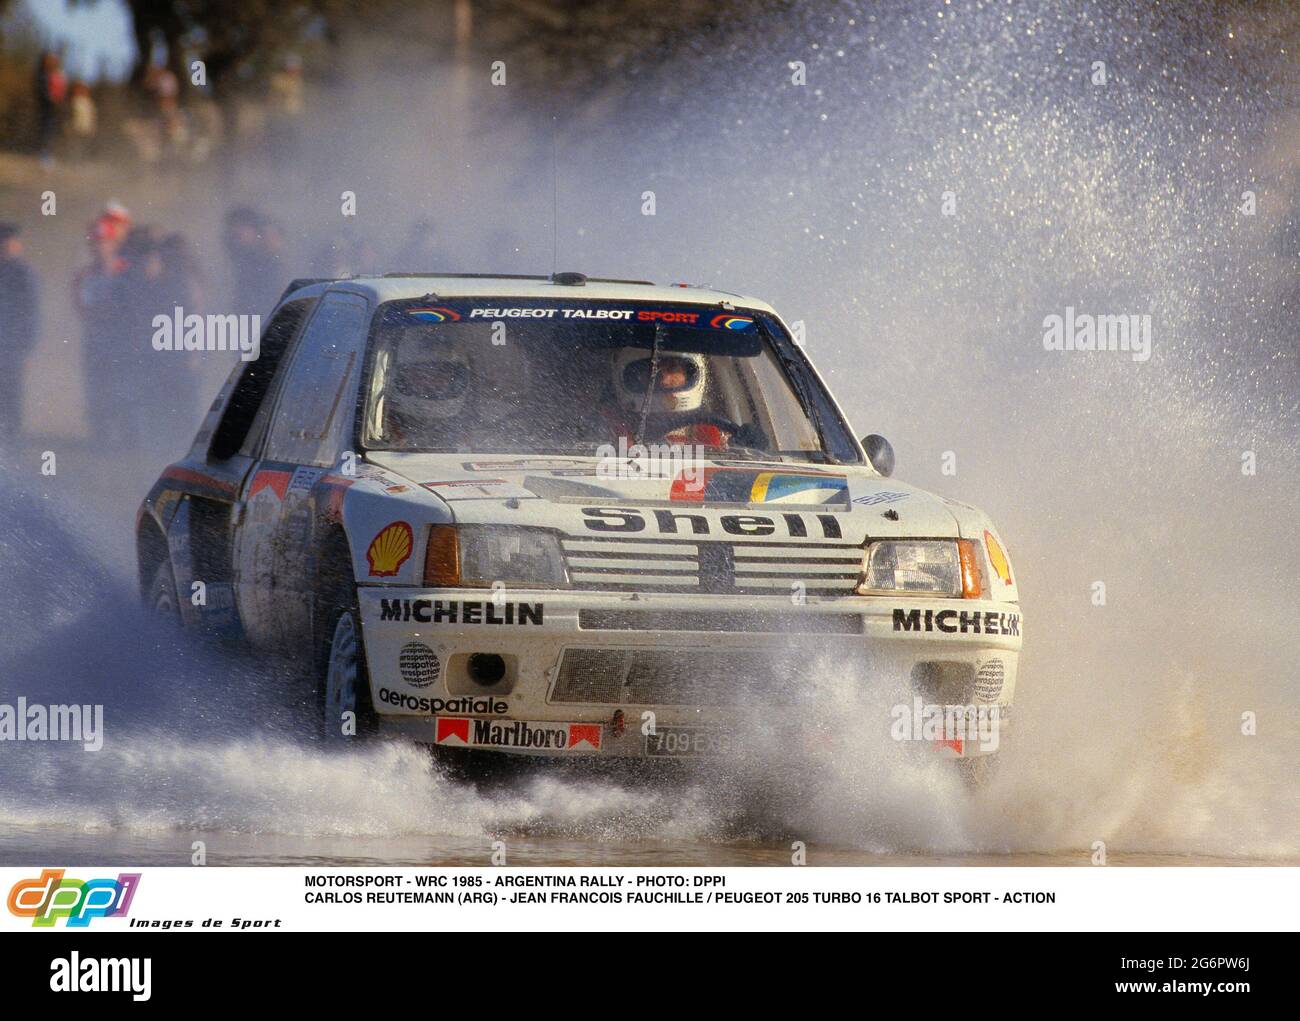 MOTORSPORT - WRC 1985 - ARGENTINIEN RALLYE - FOTO: DPPI CARLOS REUTEMANN (ARG) - JEAN FRANCOIS FAUCHILLE / PEUGEOT 205 TURBO 16 TALBOT SPORT - ACTION GUE Stockfoto